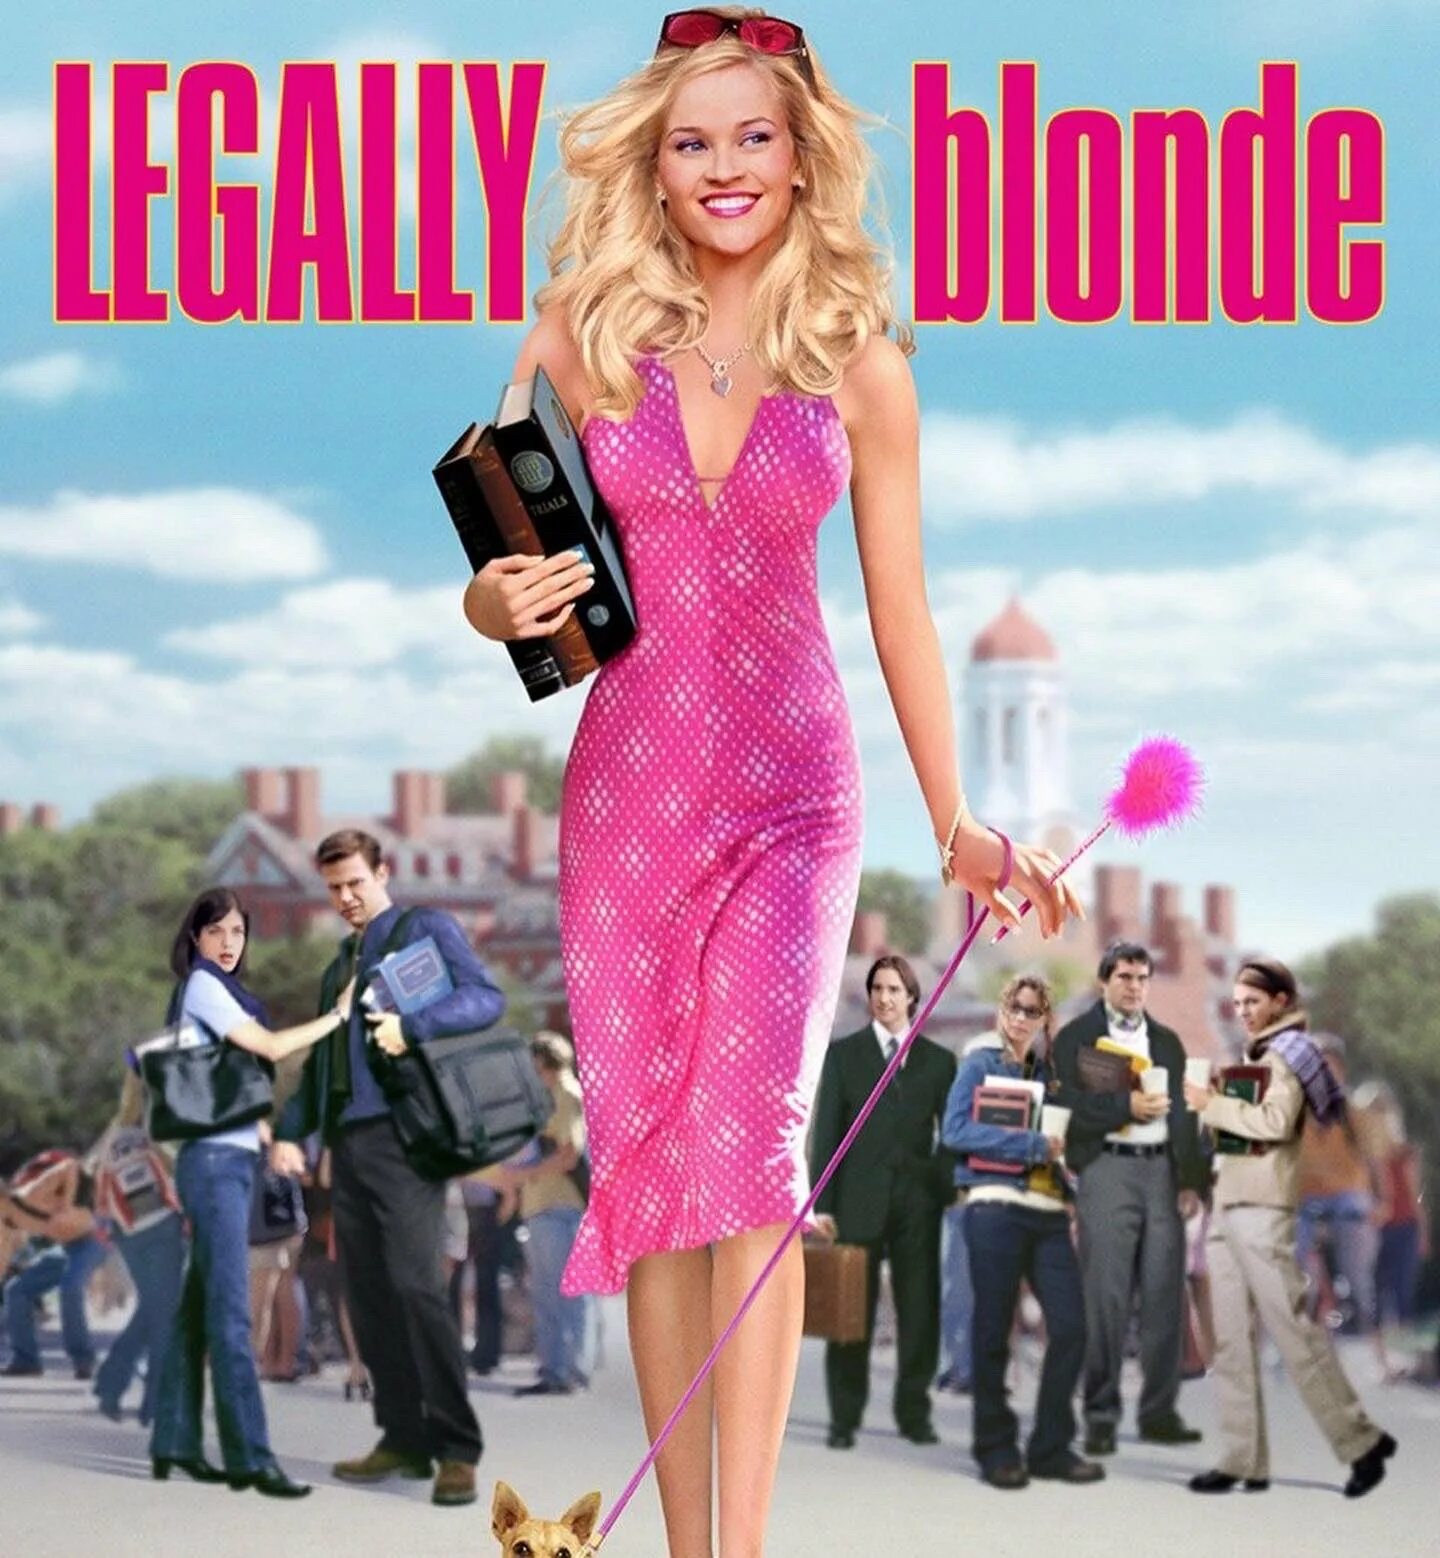 Legally blonde watch. Legally blonde, 2001. Риз Уизерспун блондинка в законе. Блондинка в законе 2. Блондинка в законе образы.